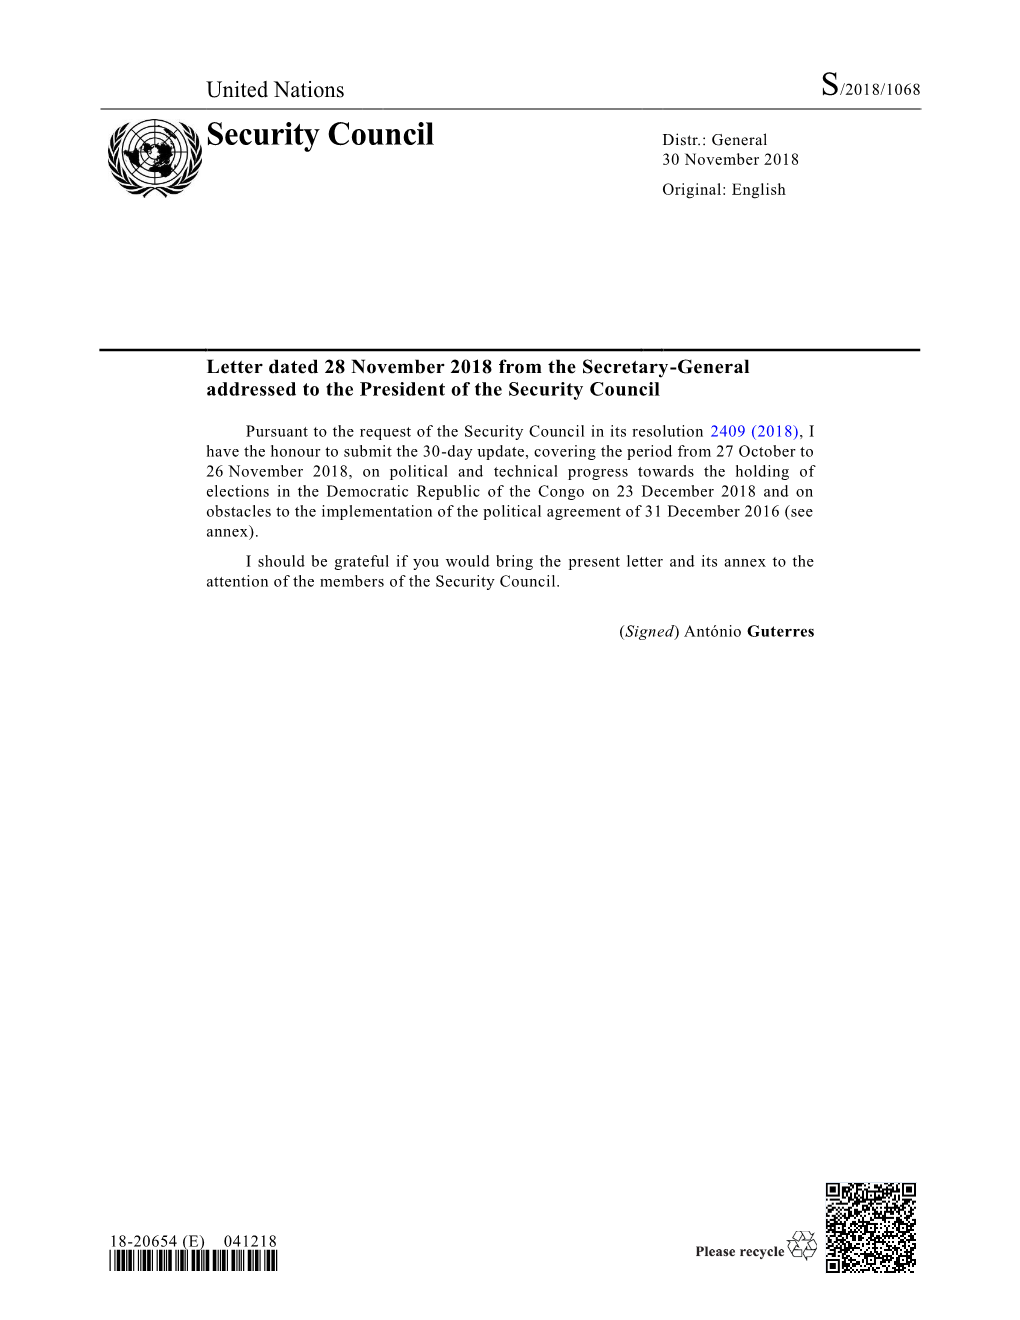 Security Council Distr.: General 30 November 2018